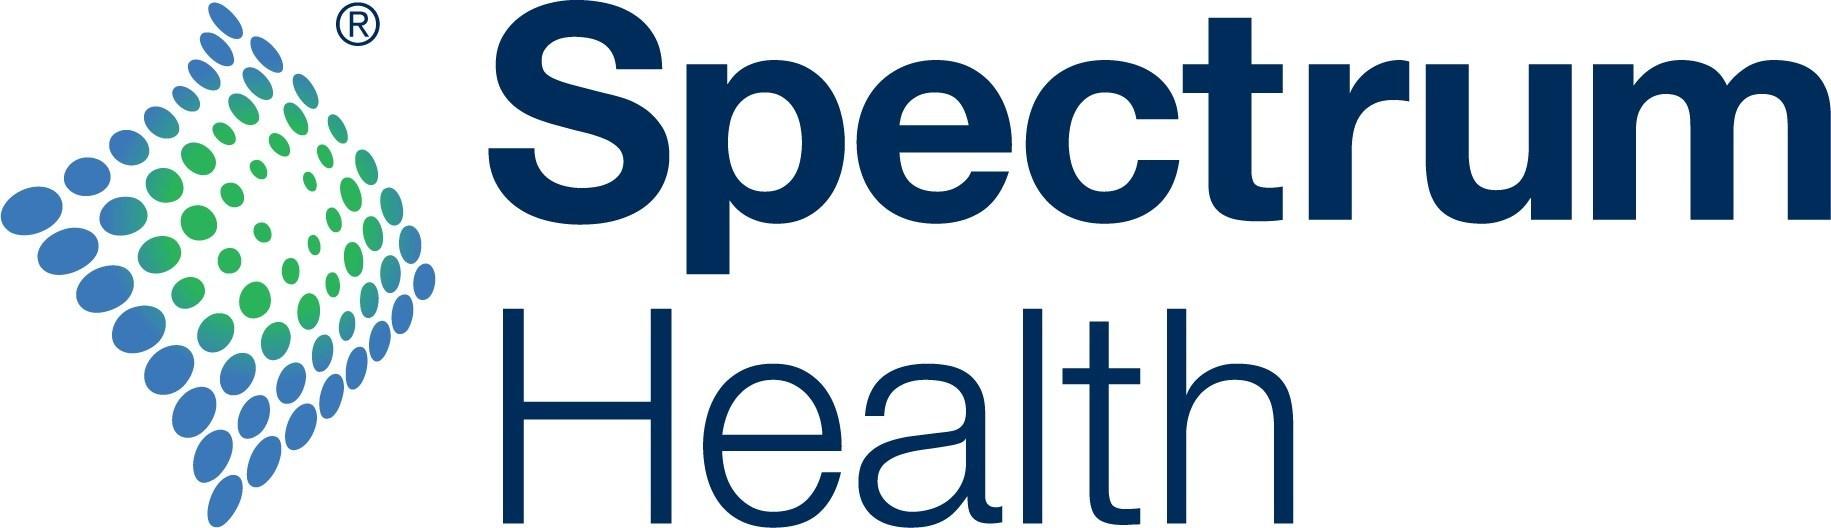 Spectrum-Health-new.jpg